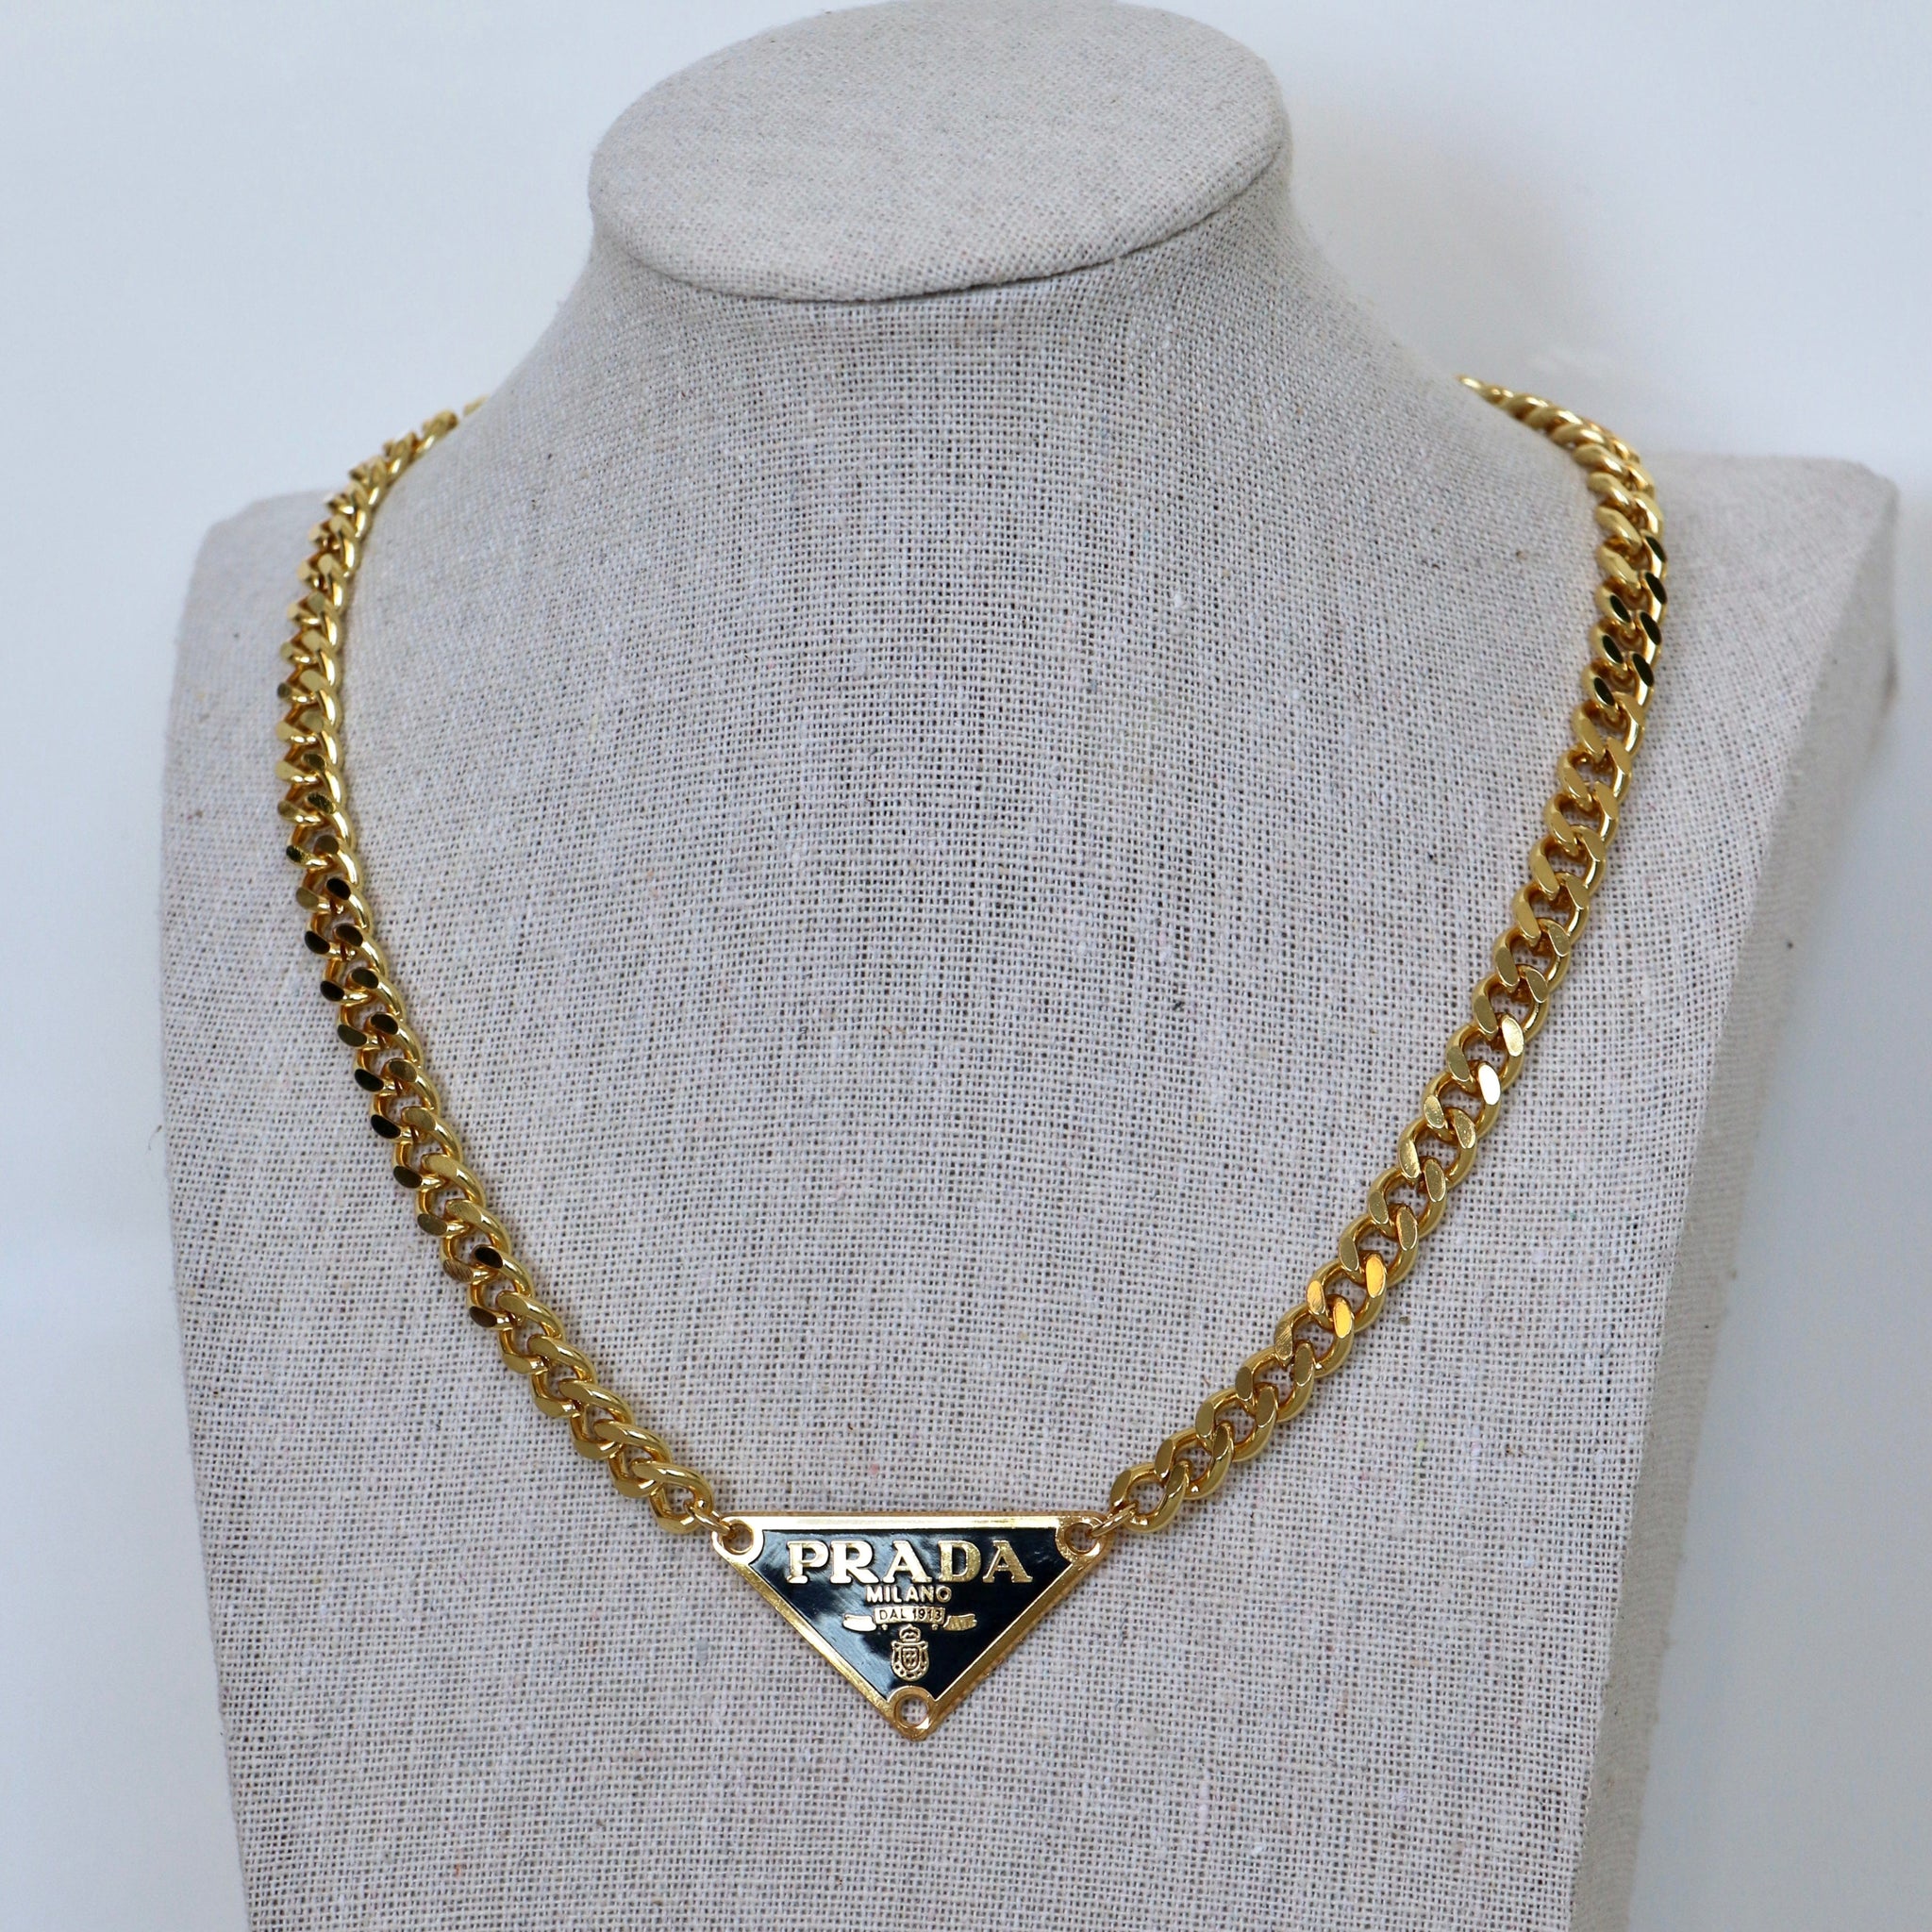 Prada Eternal Gold Pendant Necklace 18K Rose Gold with Diamonds Rose gold  25732072